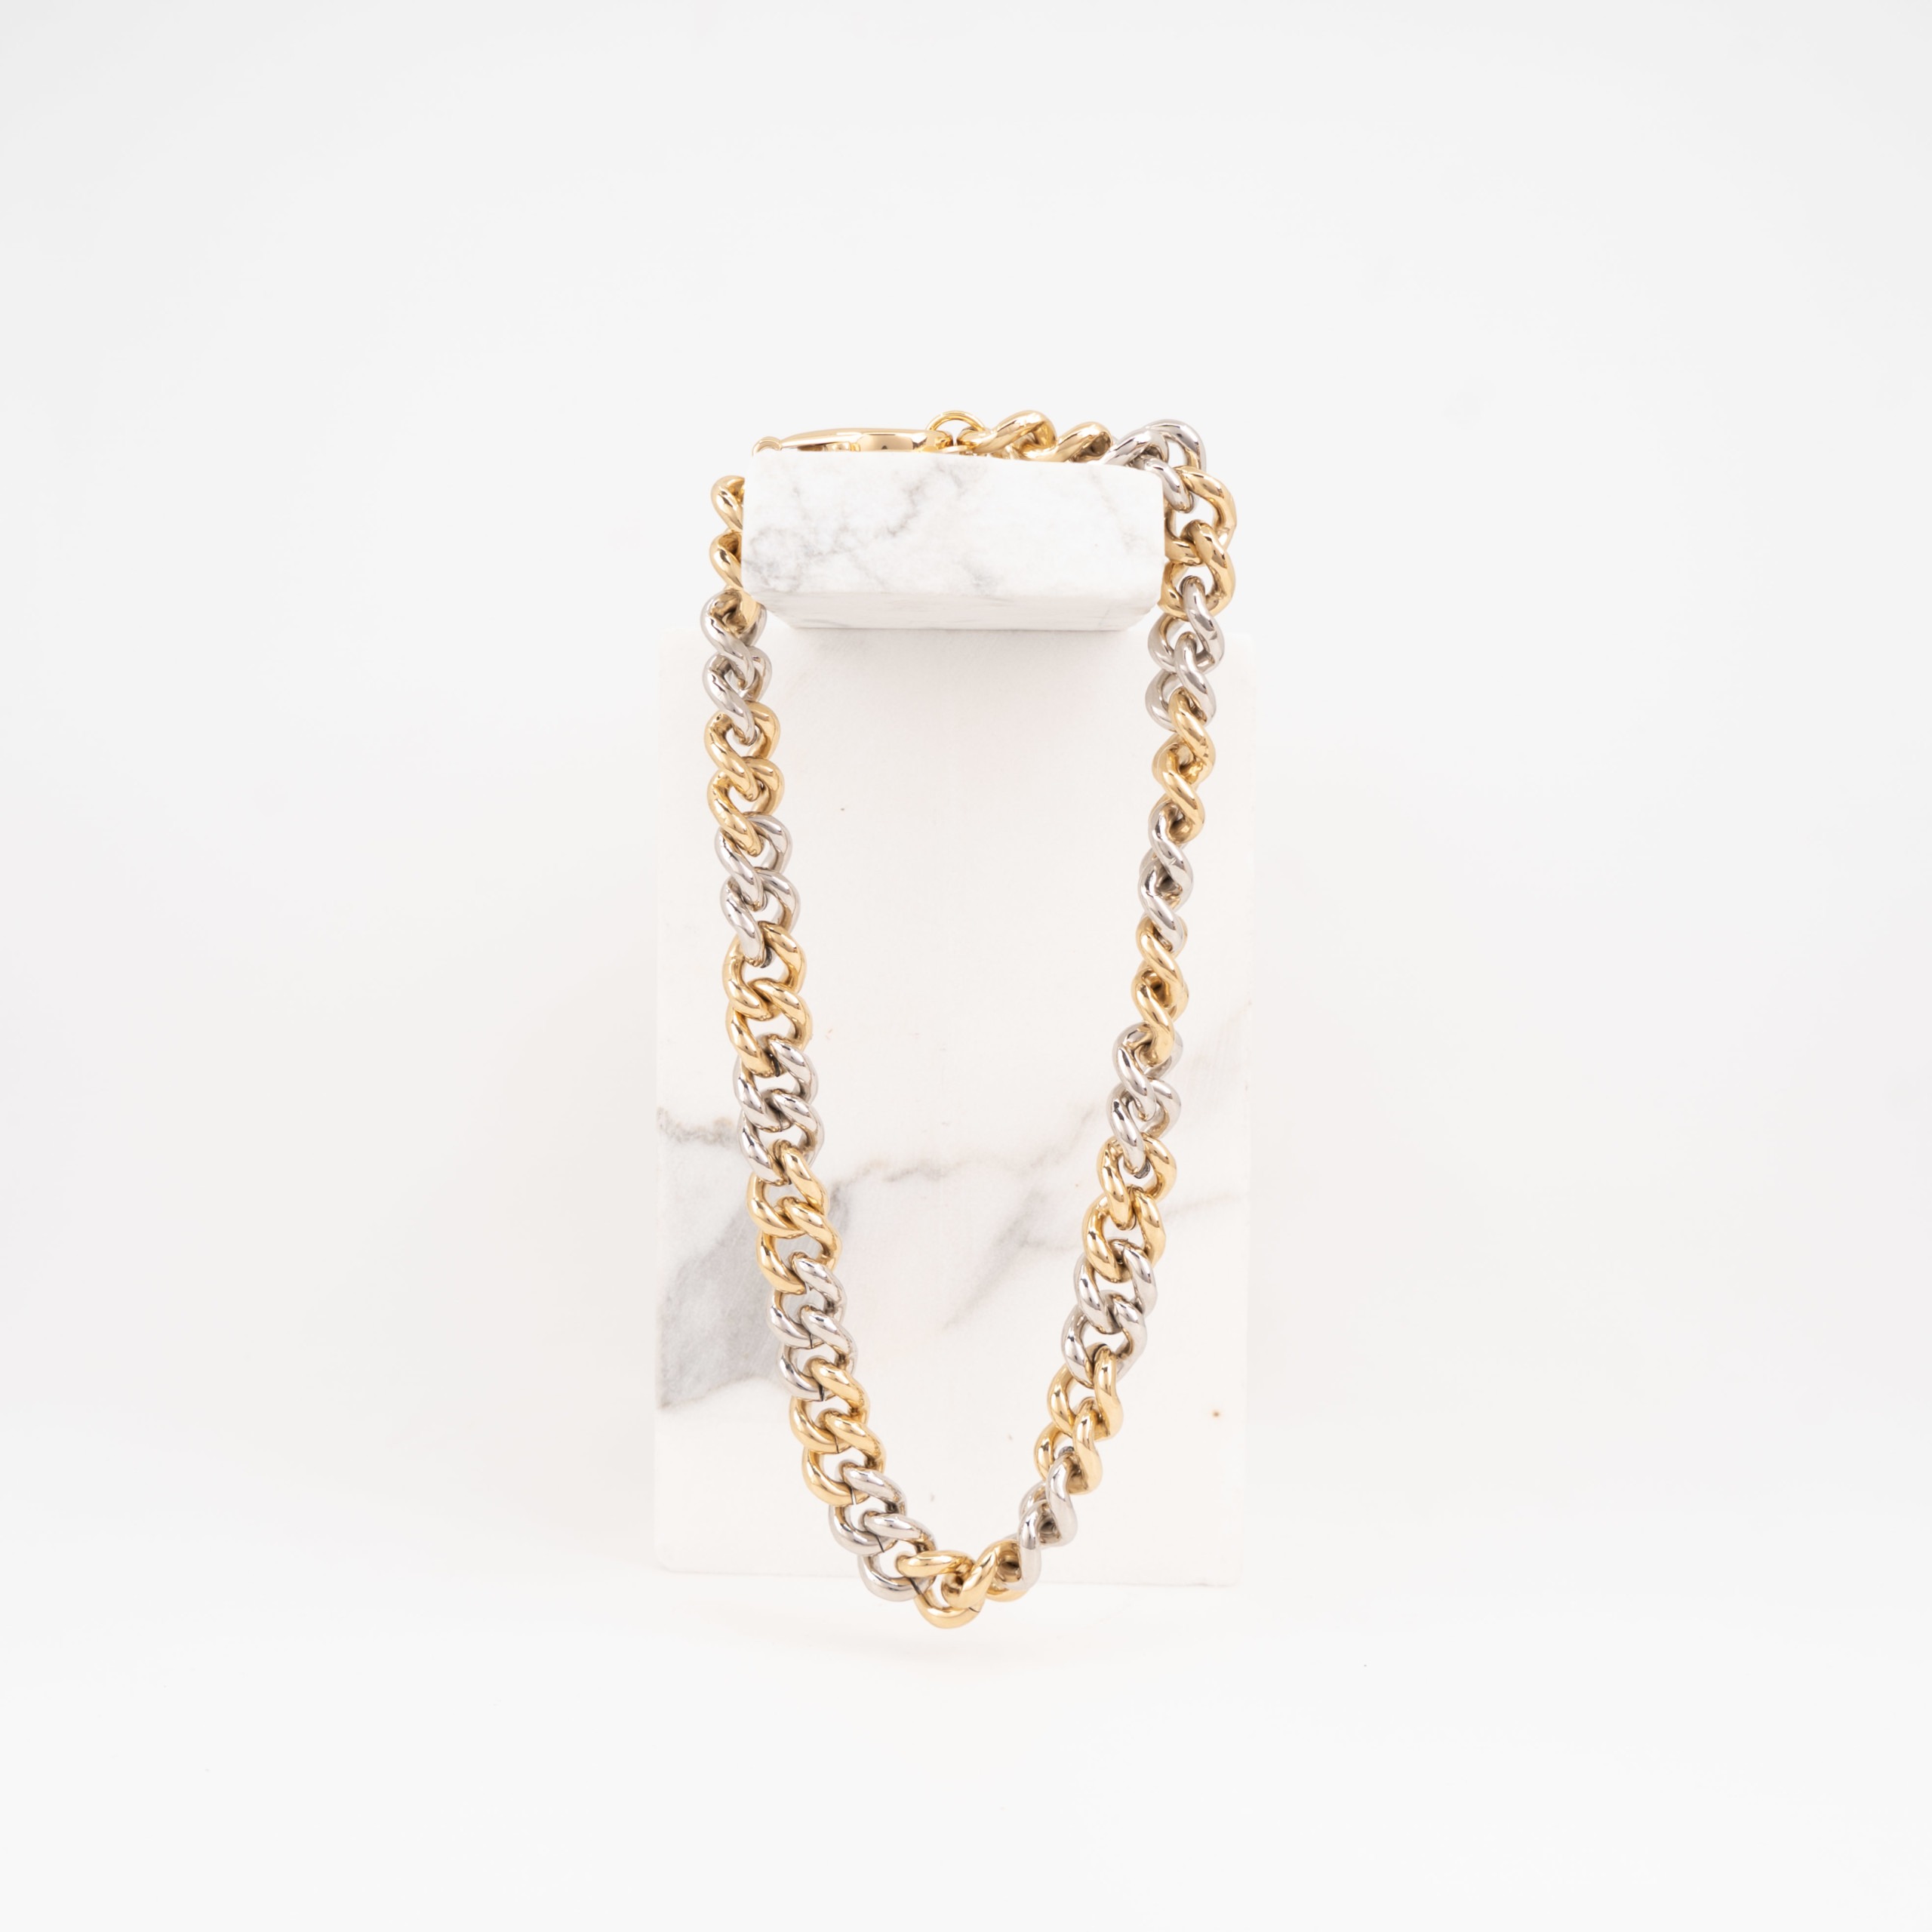 Gourmet bicolor chain necklace